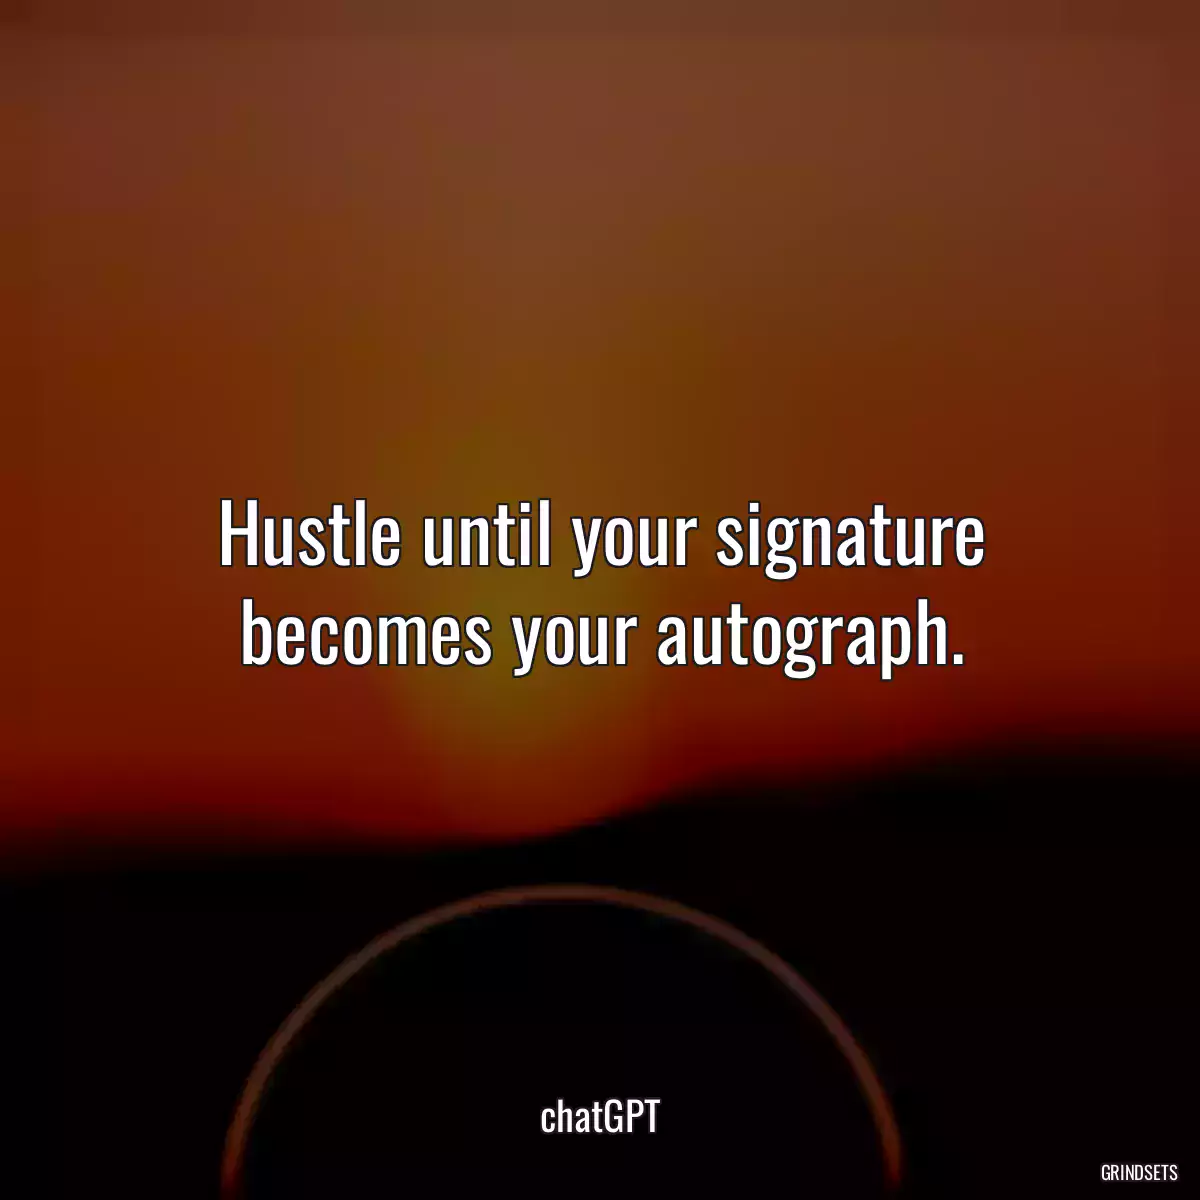 Hustle until your signature becomes your autograph.